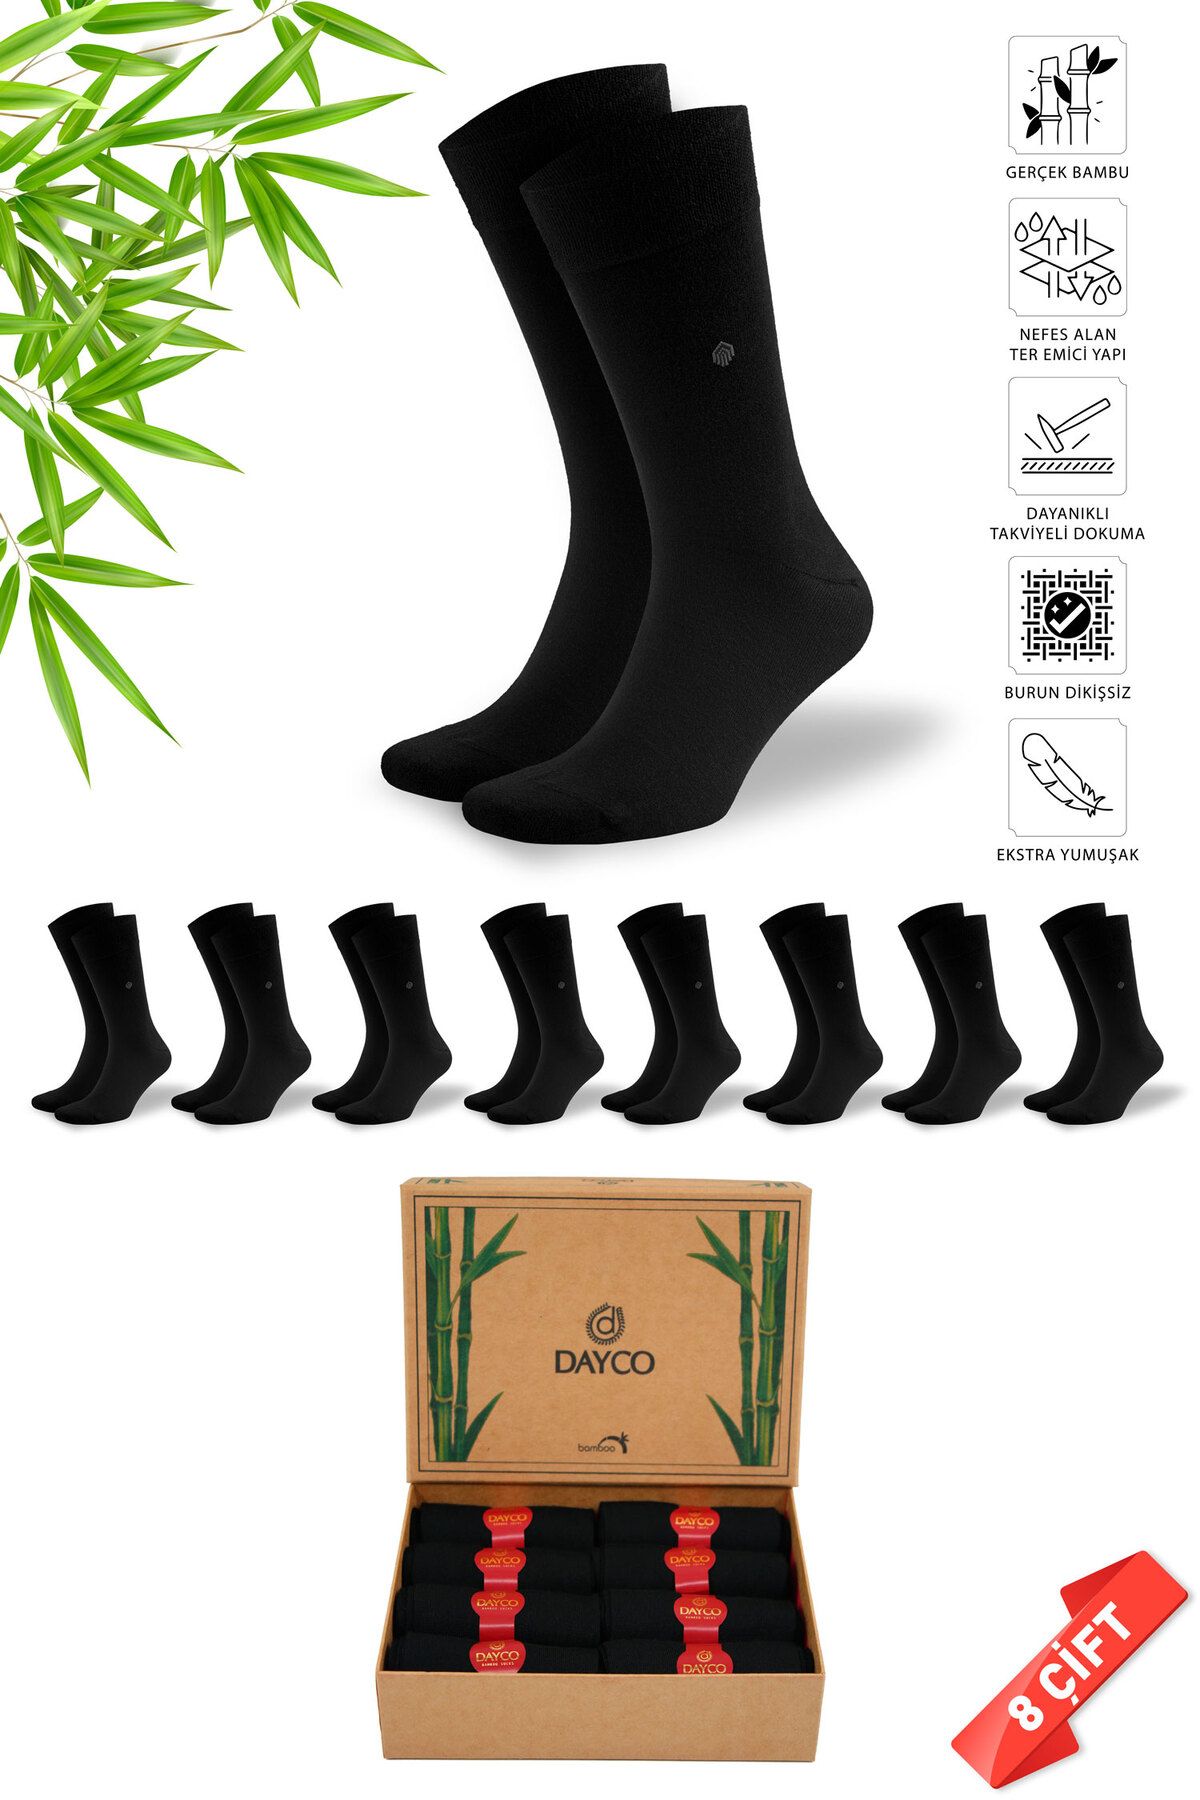 DAYCO Premium Yazlık Erkek Bambu Soket Çorap 8'li Siyah Set Kraft Kutulu